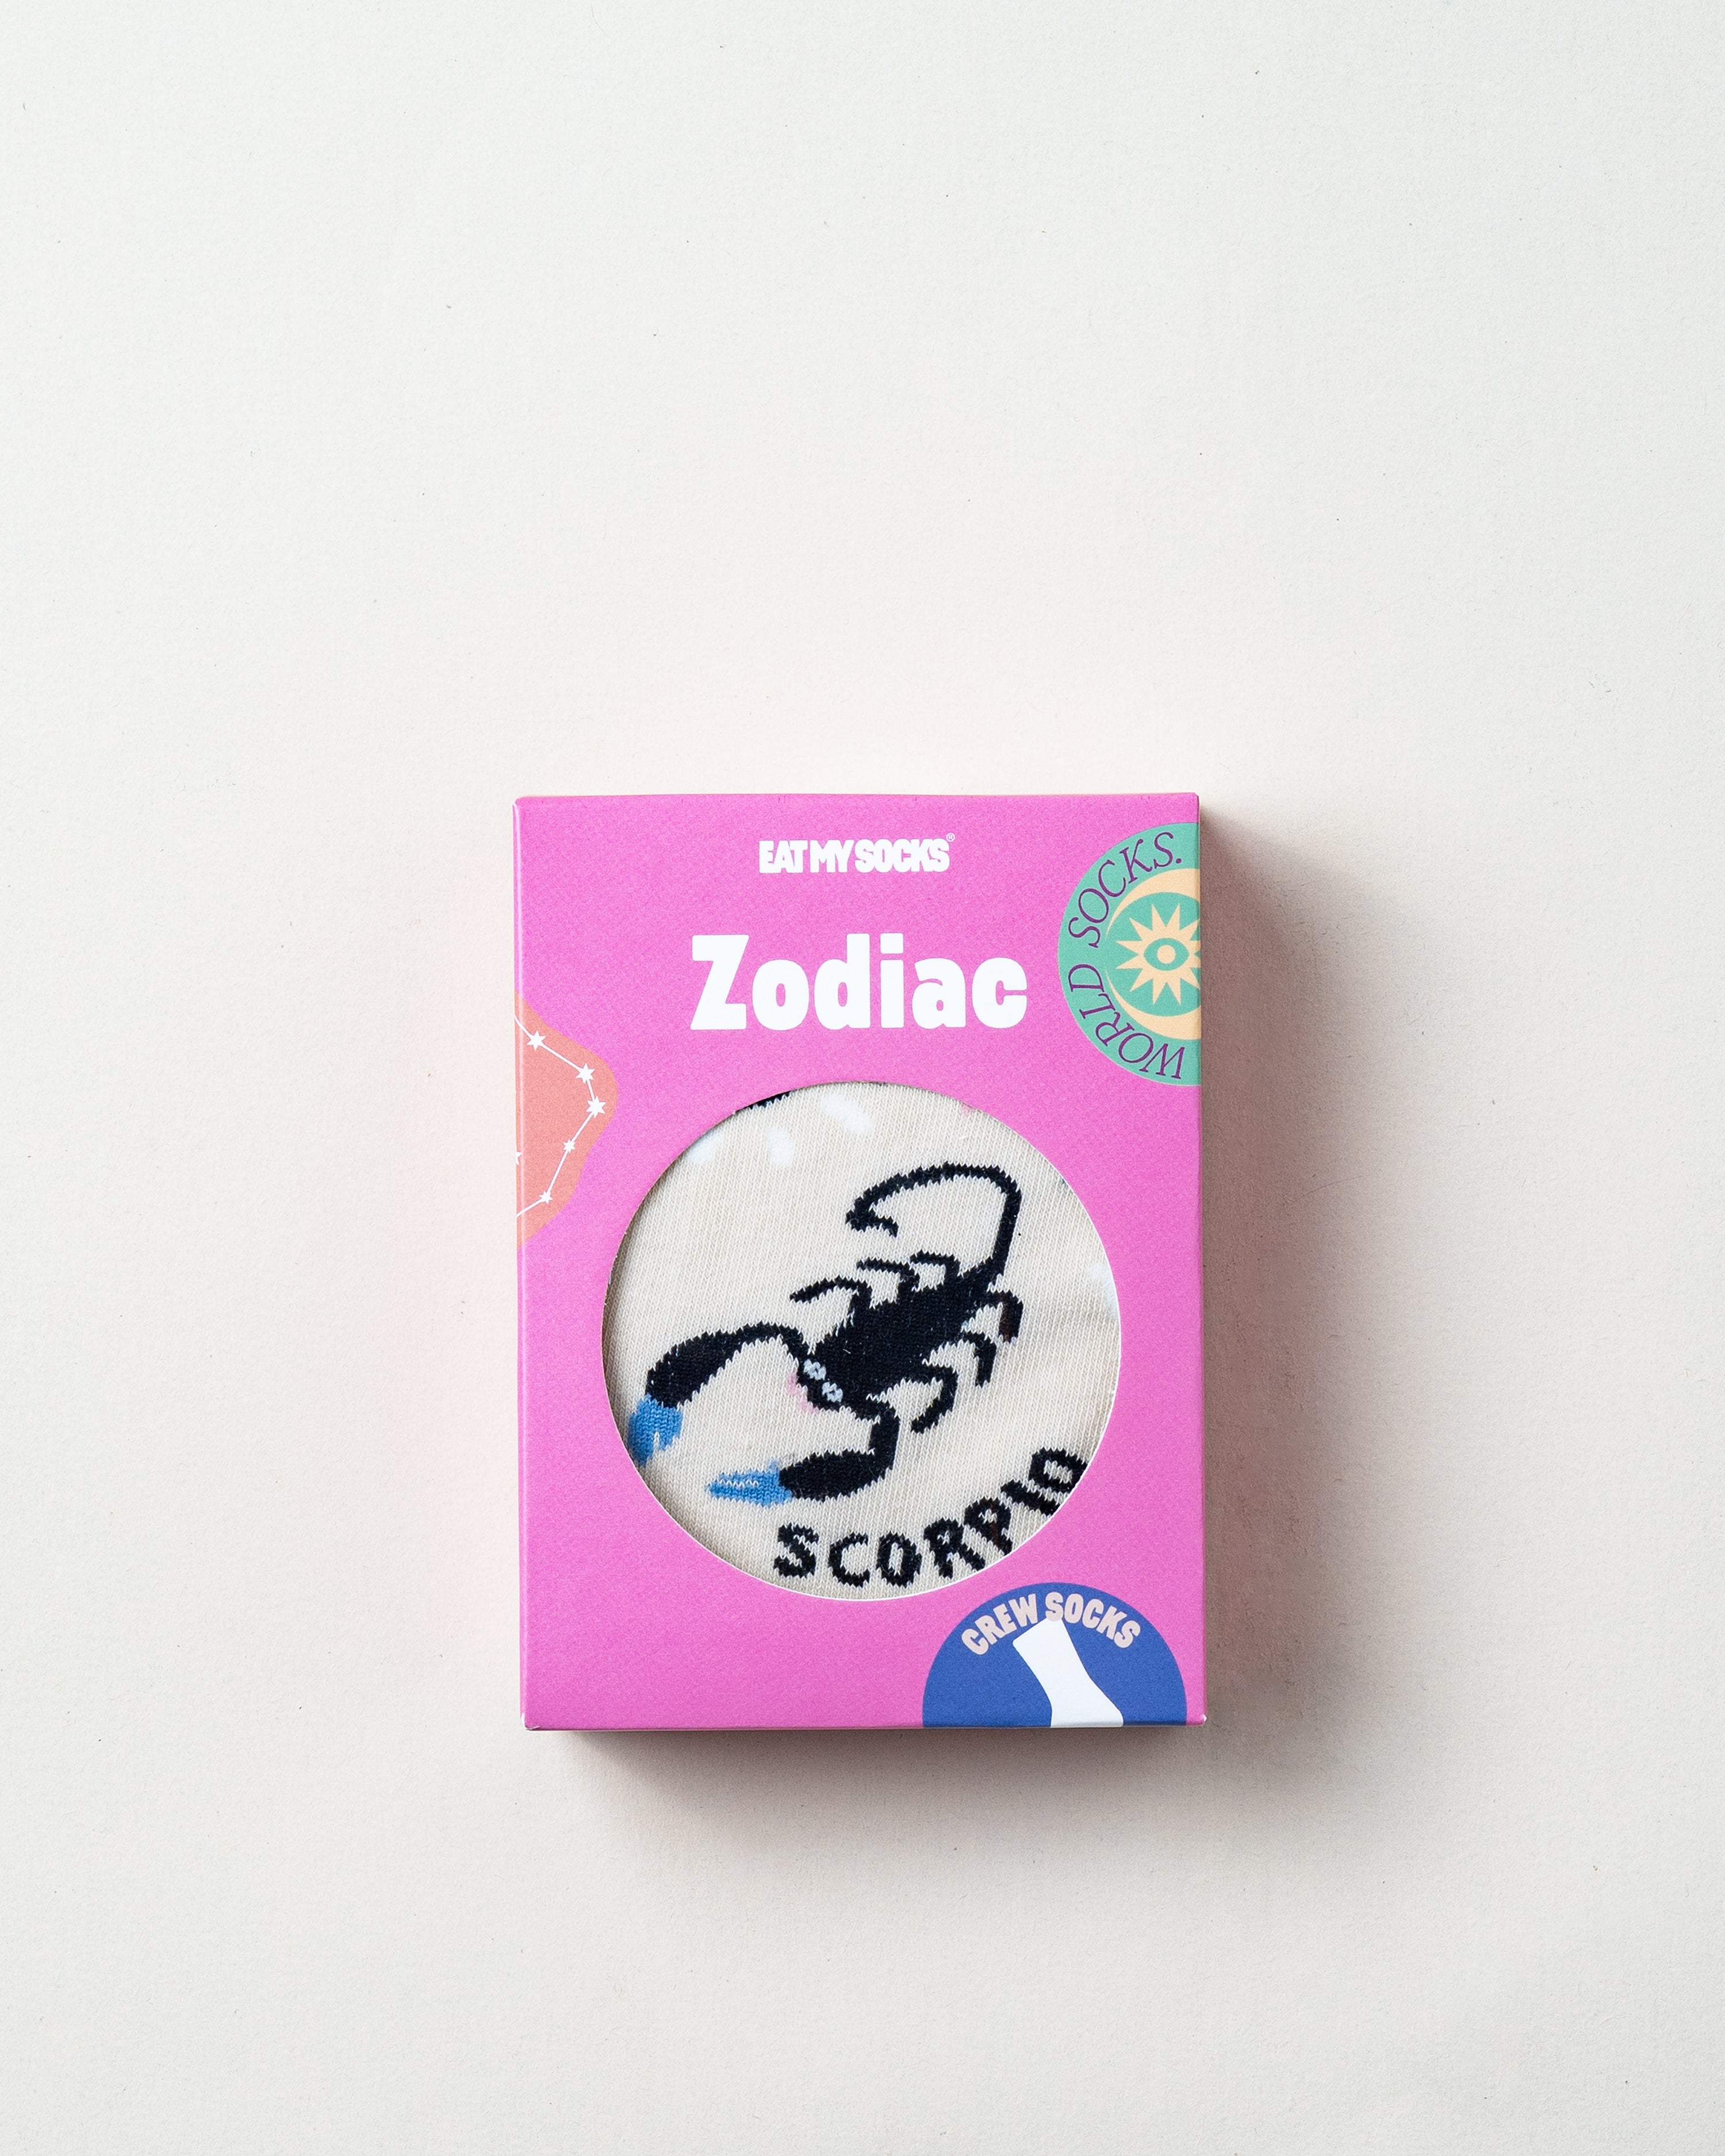 Socks/Zodiac Scorpio